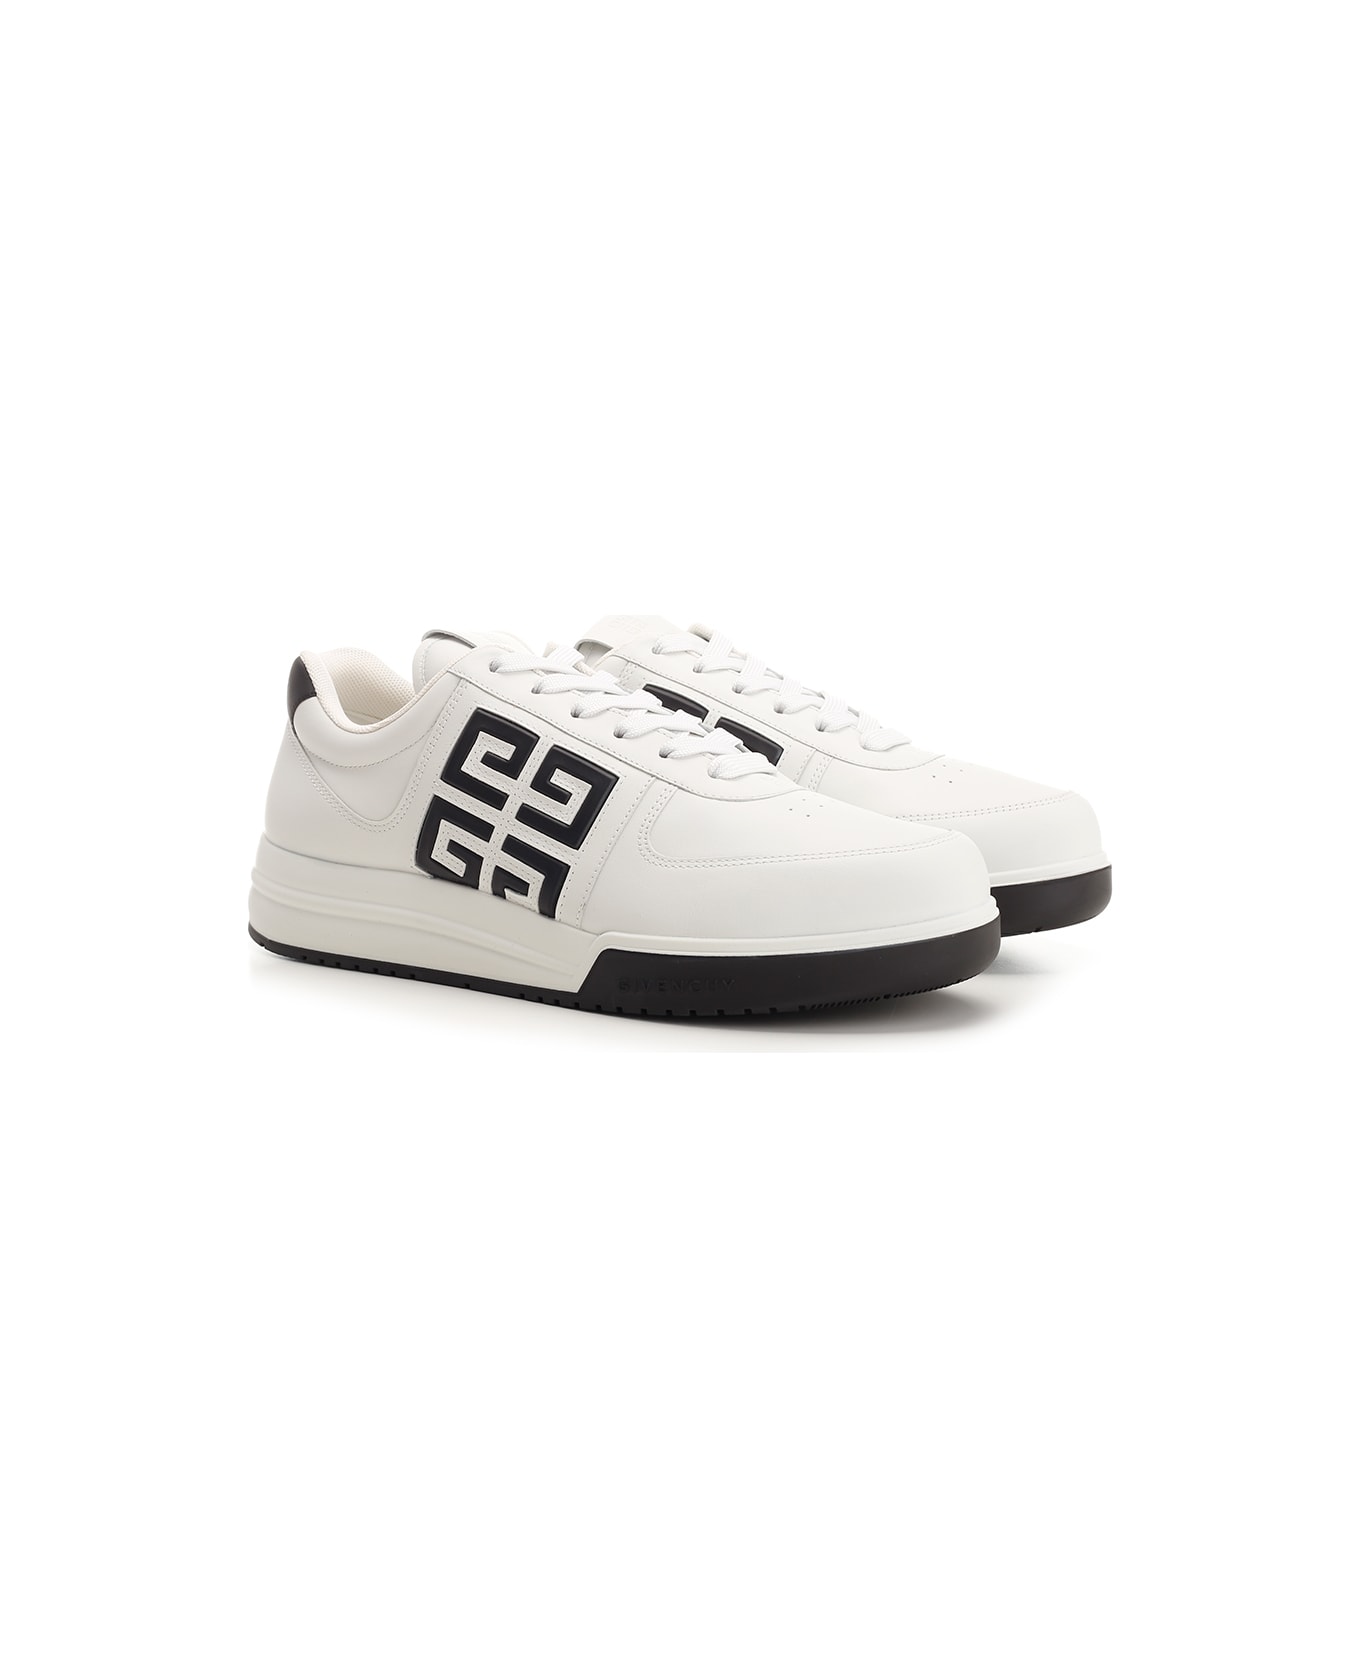 Givenchy White/black 'g4' Sneakers - White